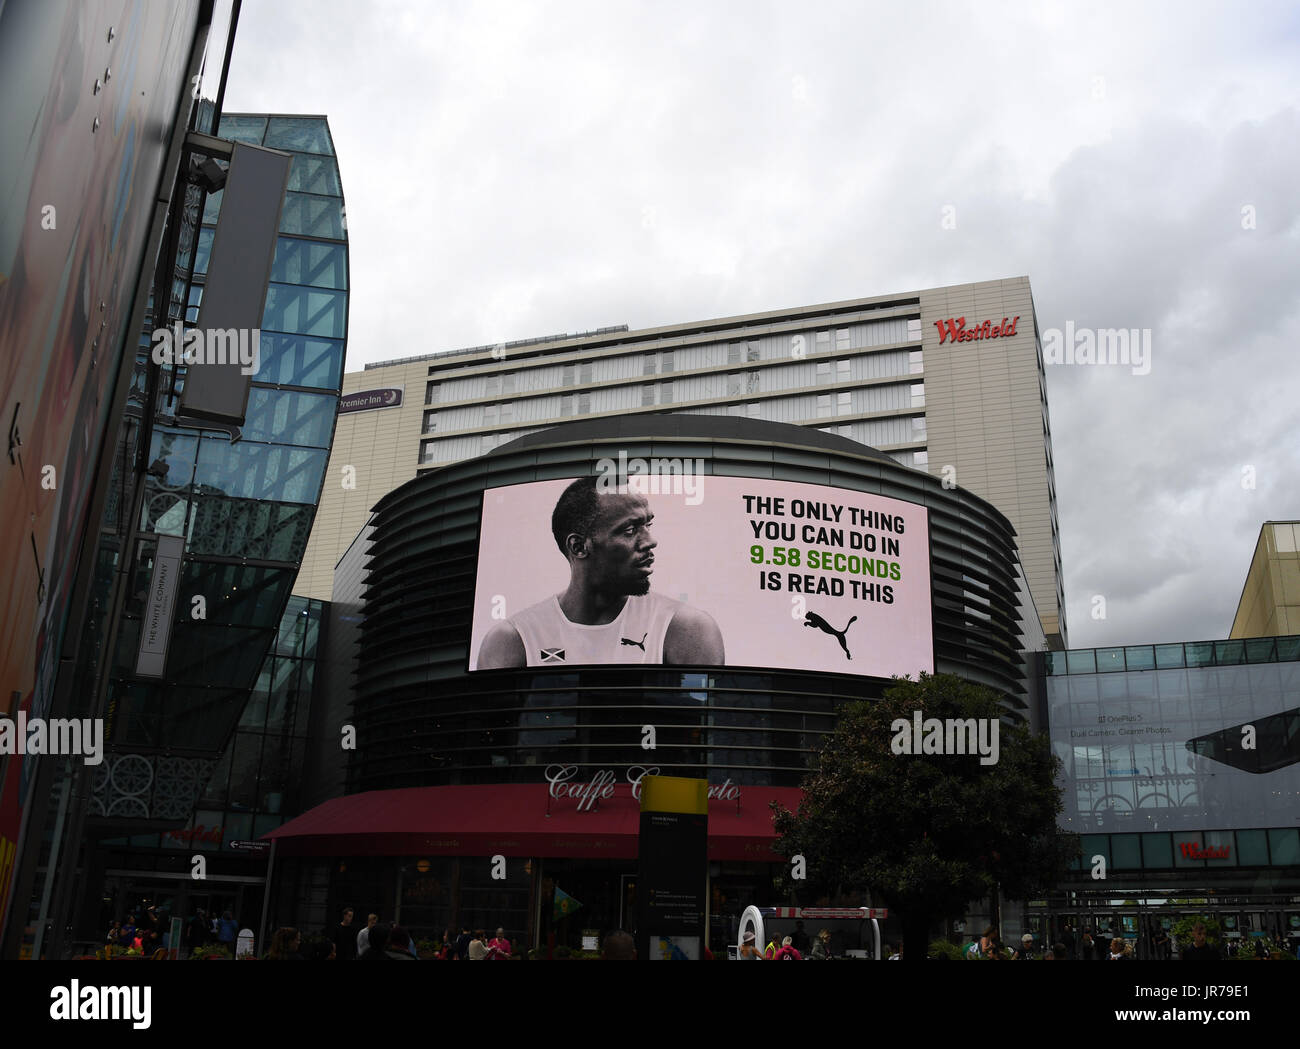 Puma advertisement featuring Usain Bolt (JAM) with the slogan 